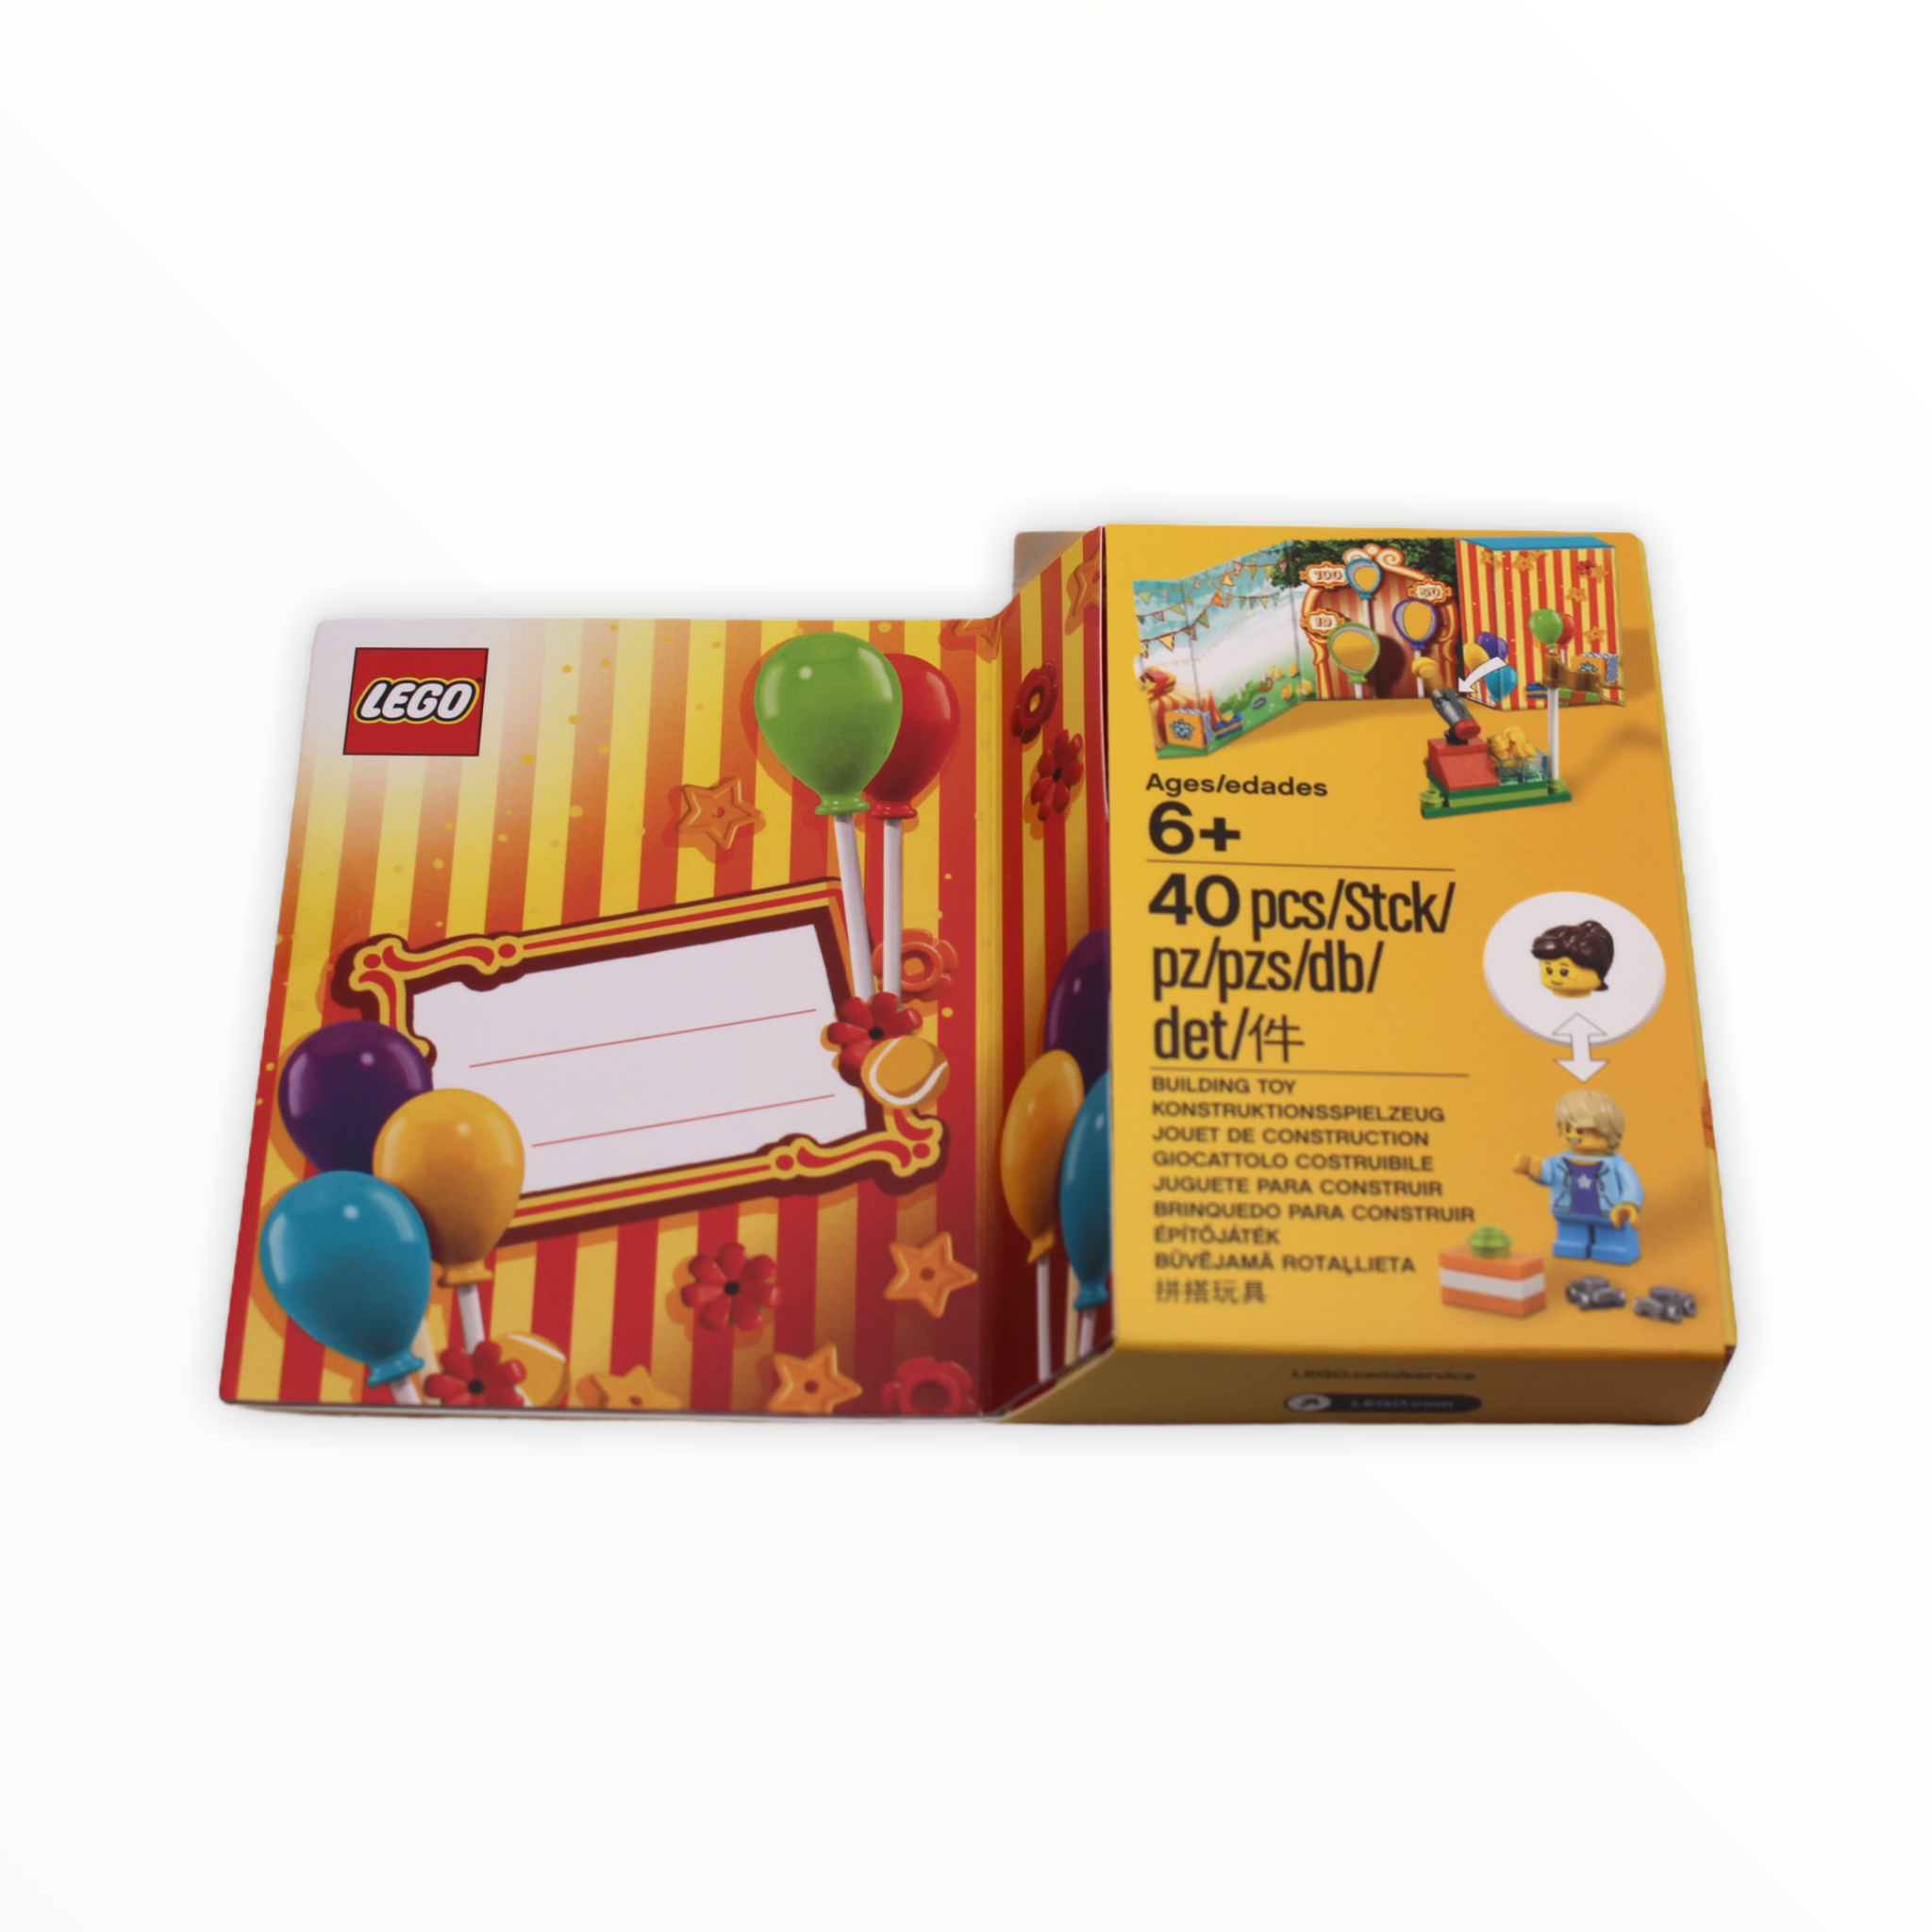 Retired Set 853906 LEGO Greeting Card